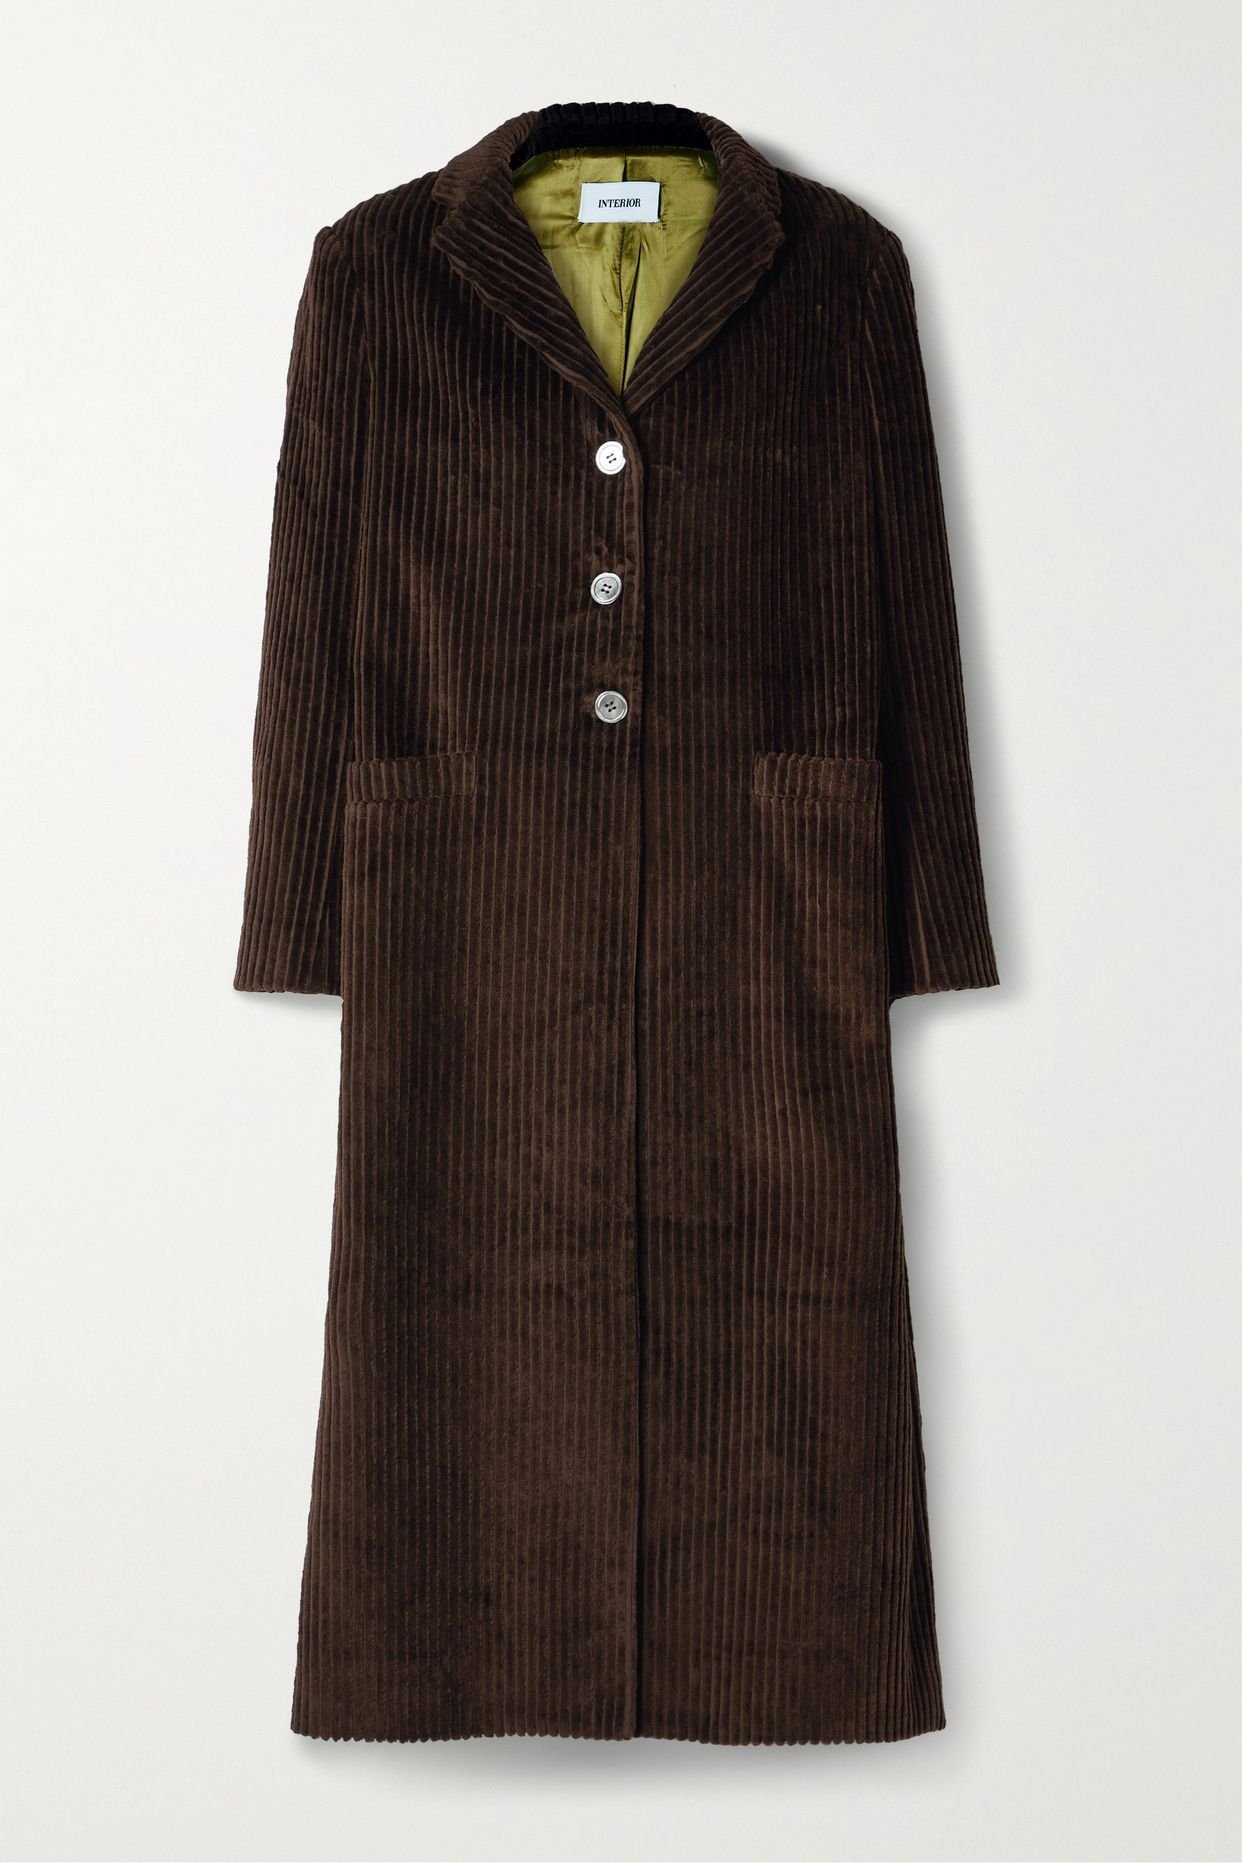 INTERIOR - + The Vanguard The Moby cotton-corduroy coat